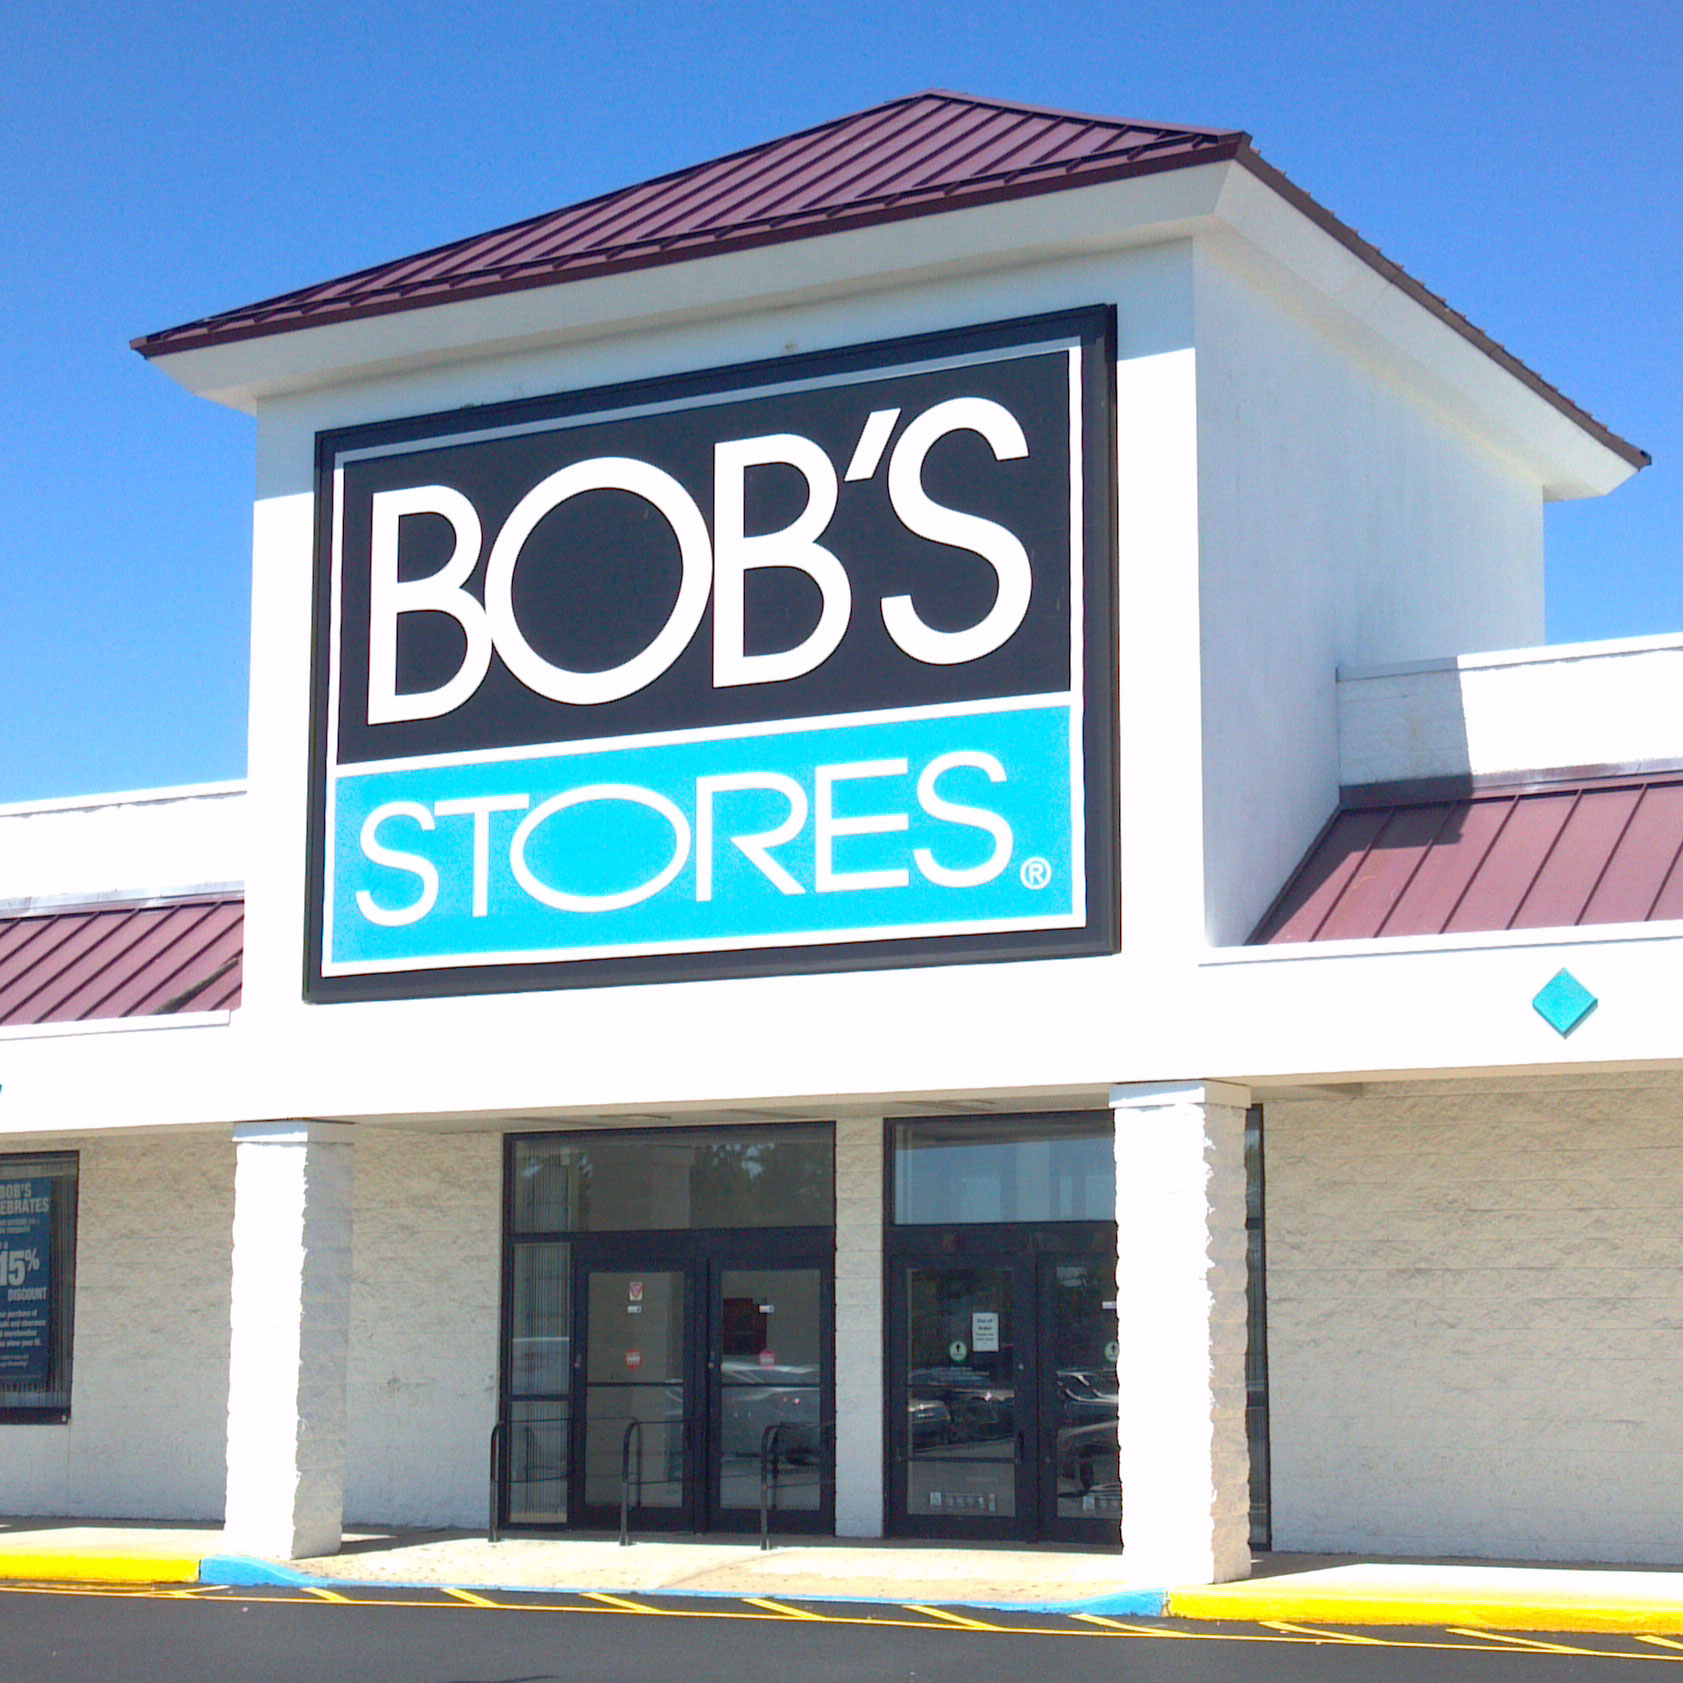 West Islip, NY - Store Information - Bob’s Stores